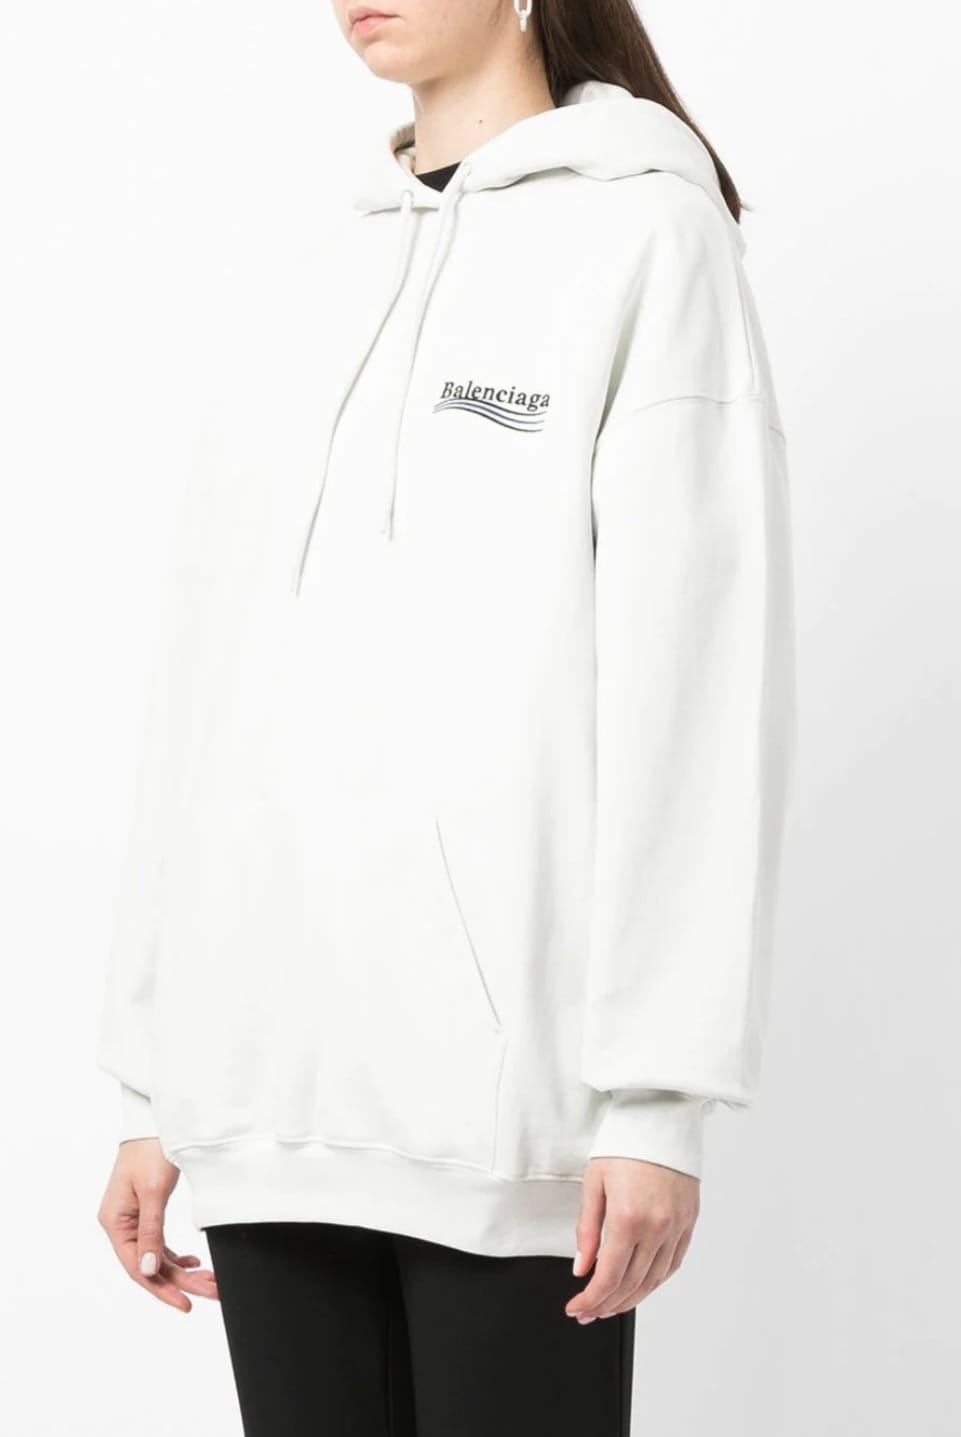 balenciaga off white hoodie